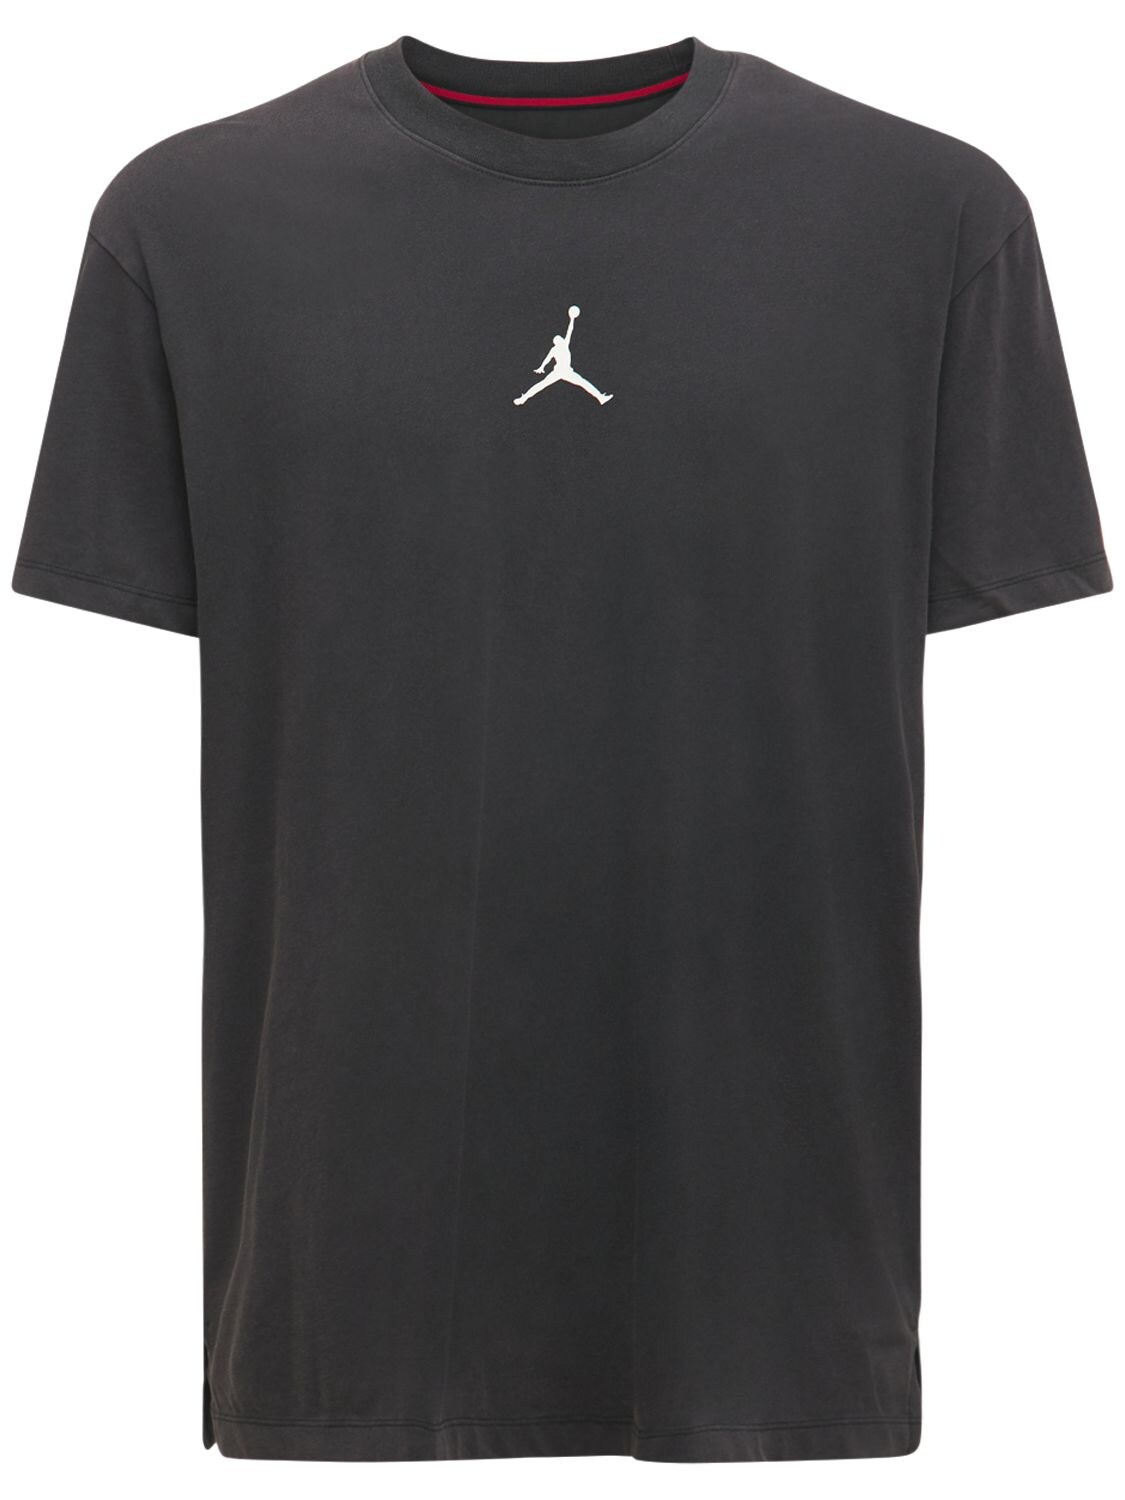 Jordan Dri-fit T-shirt